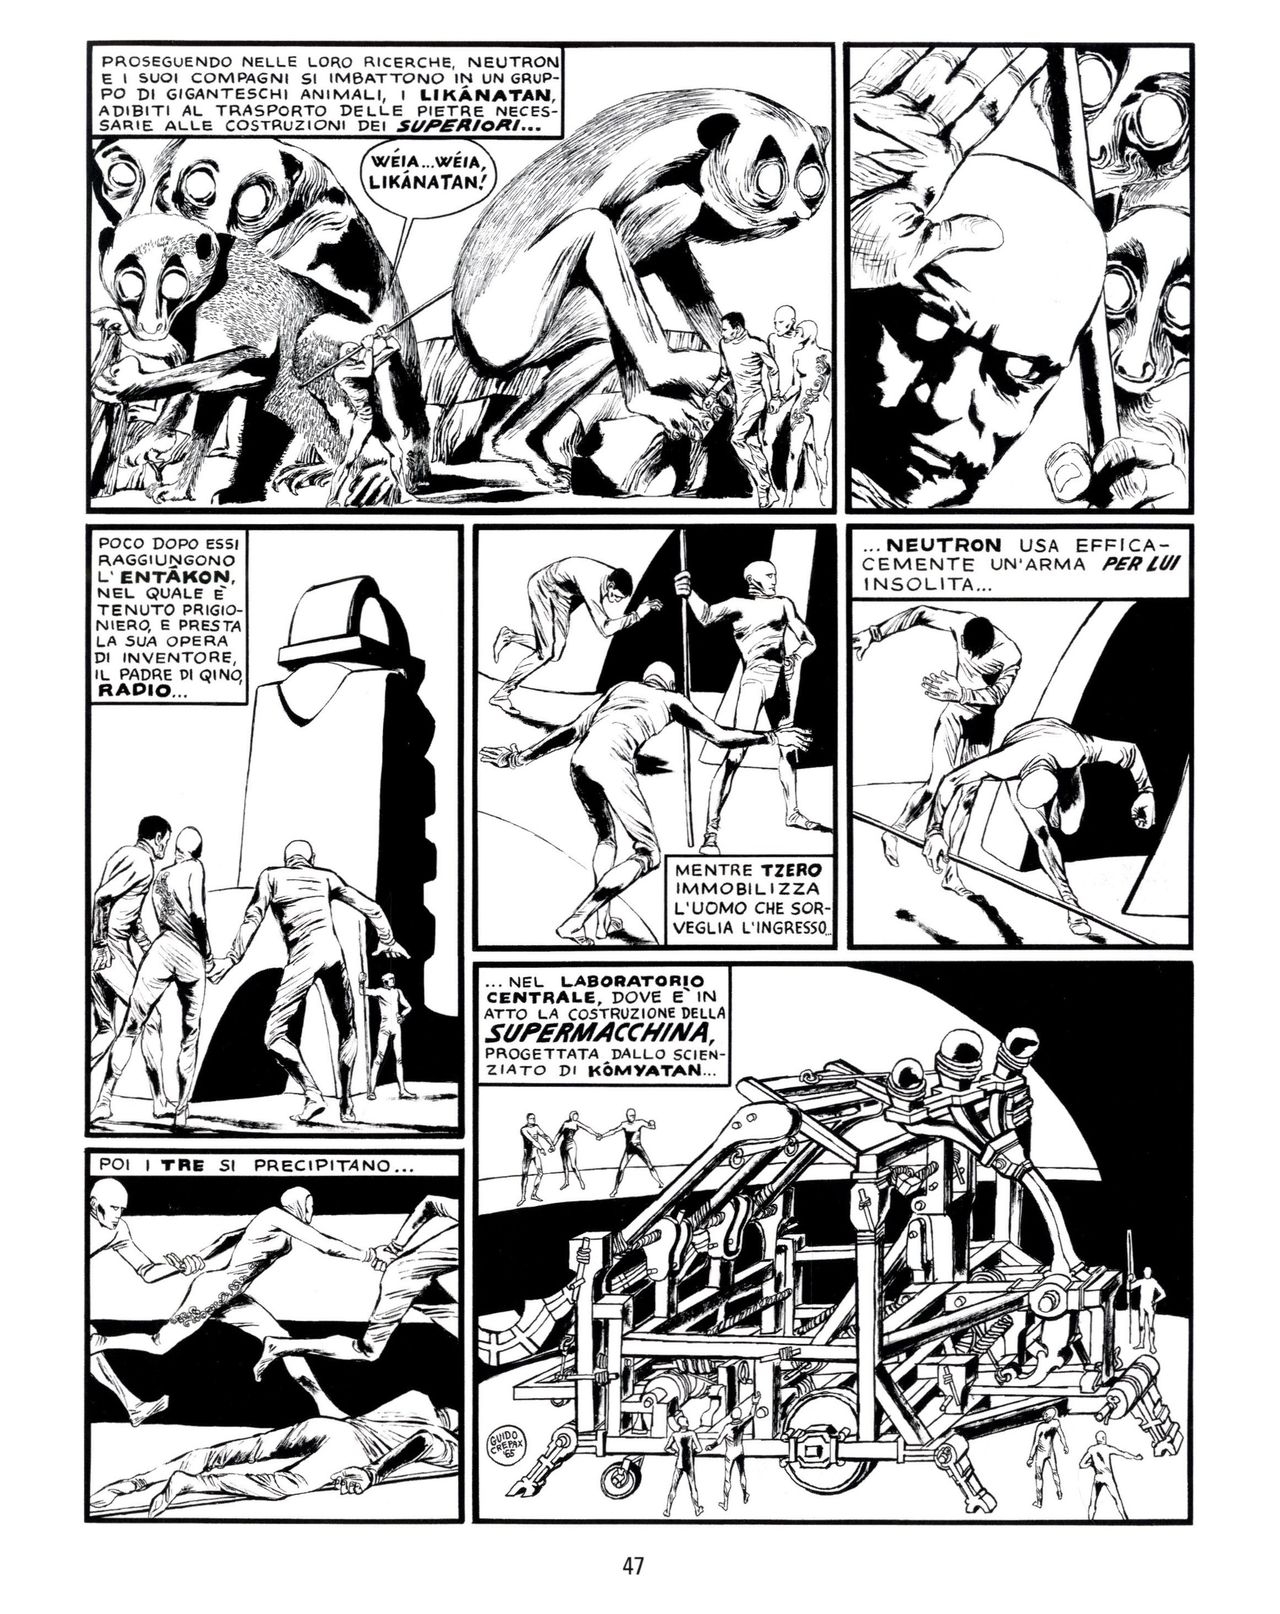 [Guido Crepax] Erotica Fumetti #25 : L'ascesa dei sotterranei : I cavalieri ciechi [Italian] 48